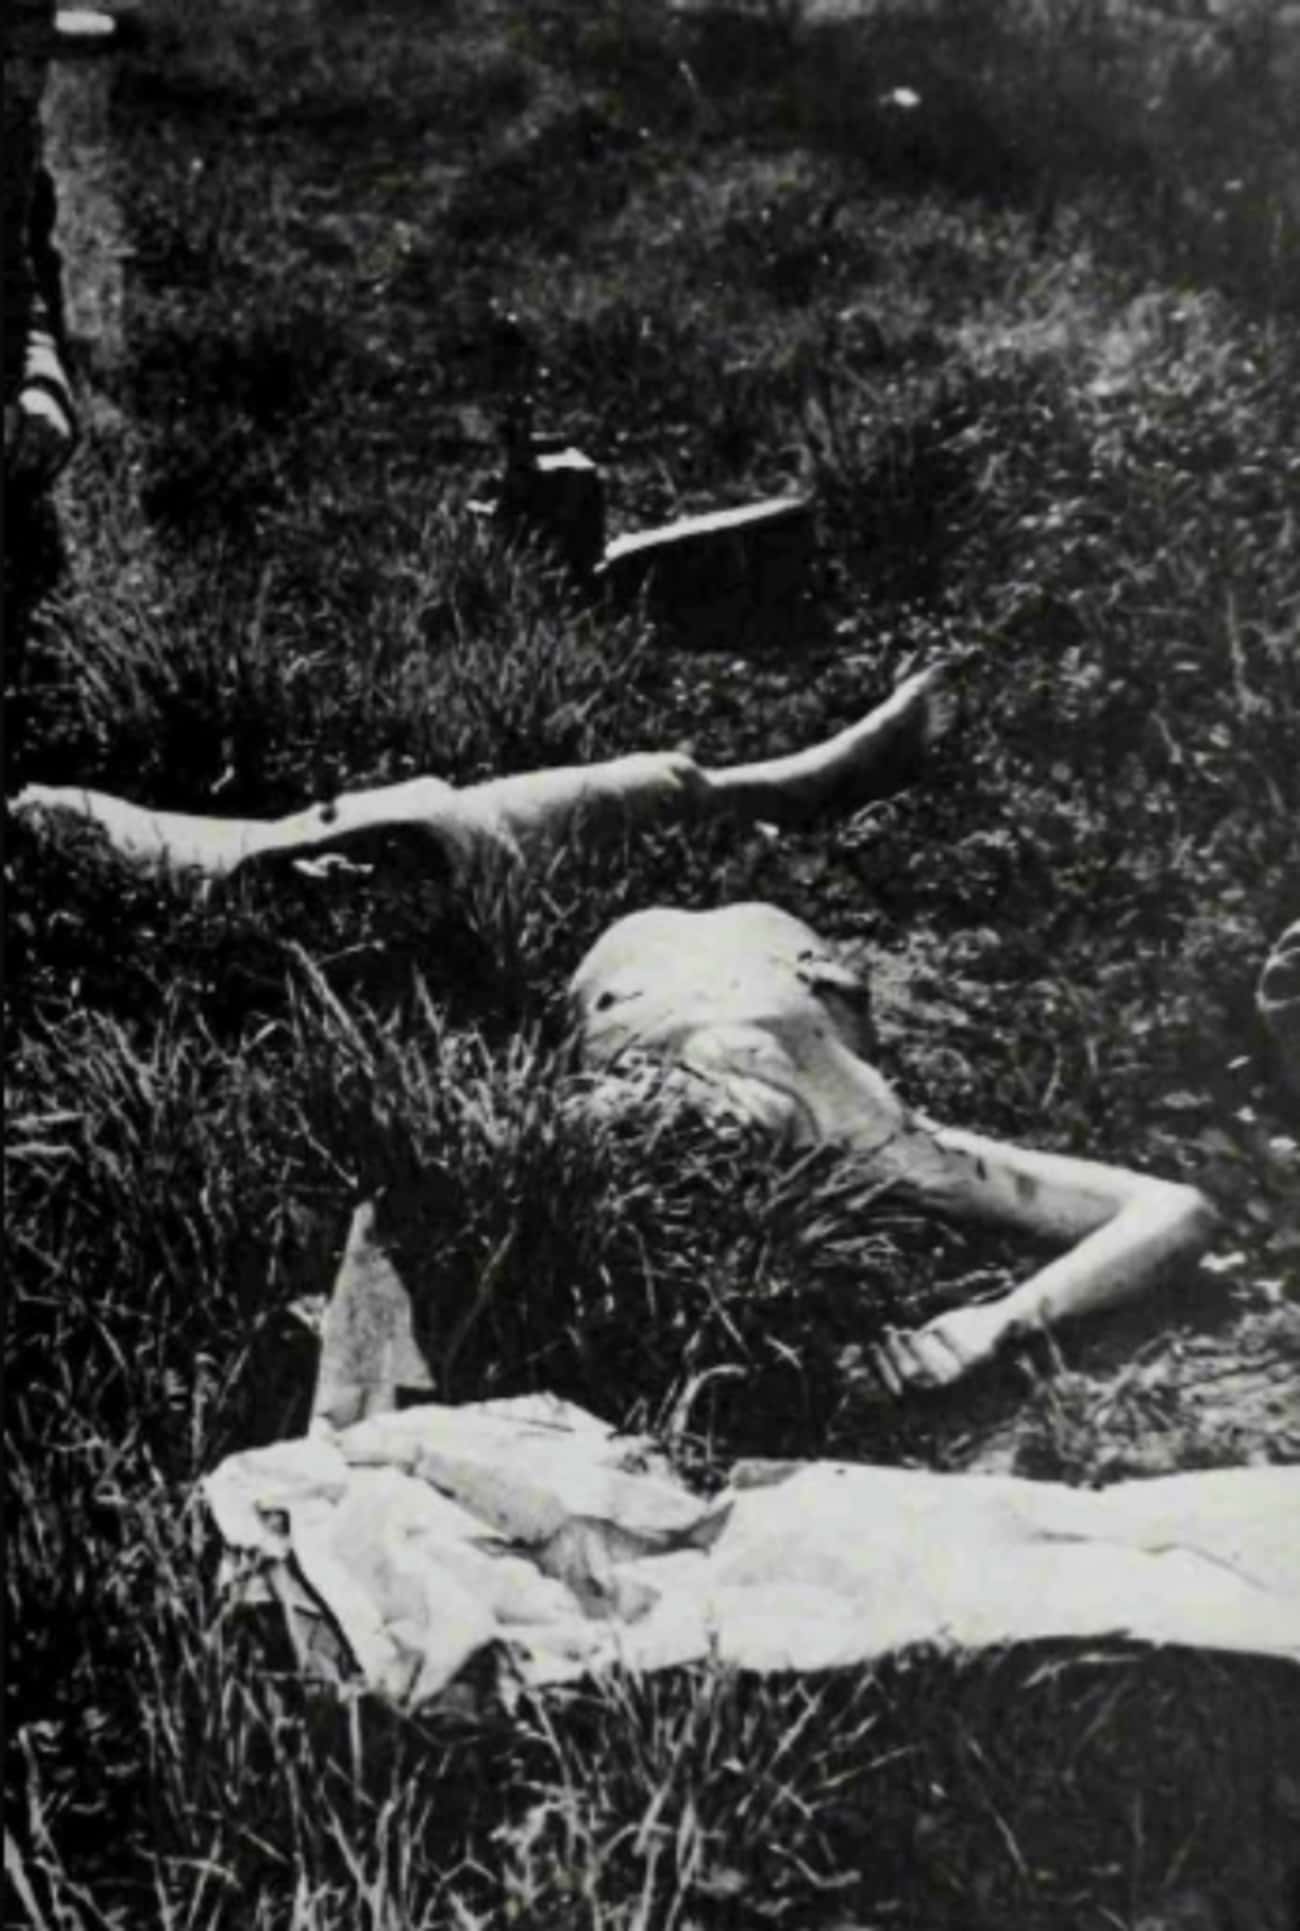 The Infamous Black Dahlia Murder